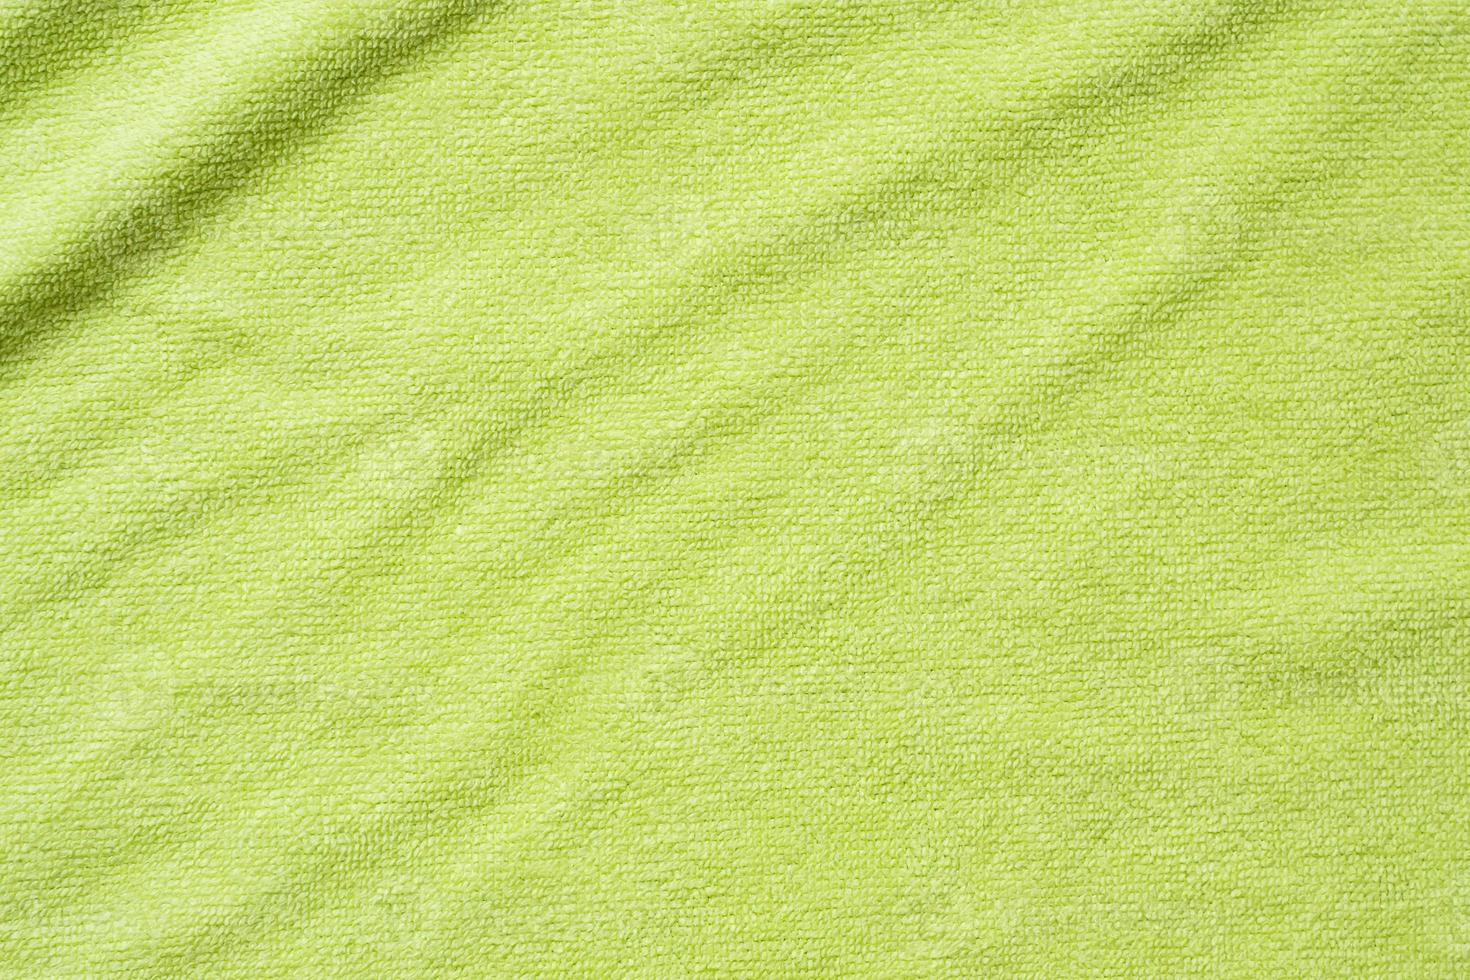 groen handdoek kleding stof structuur oppervlakte dichtbij omhoog achtergrond foto